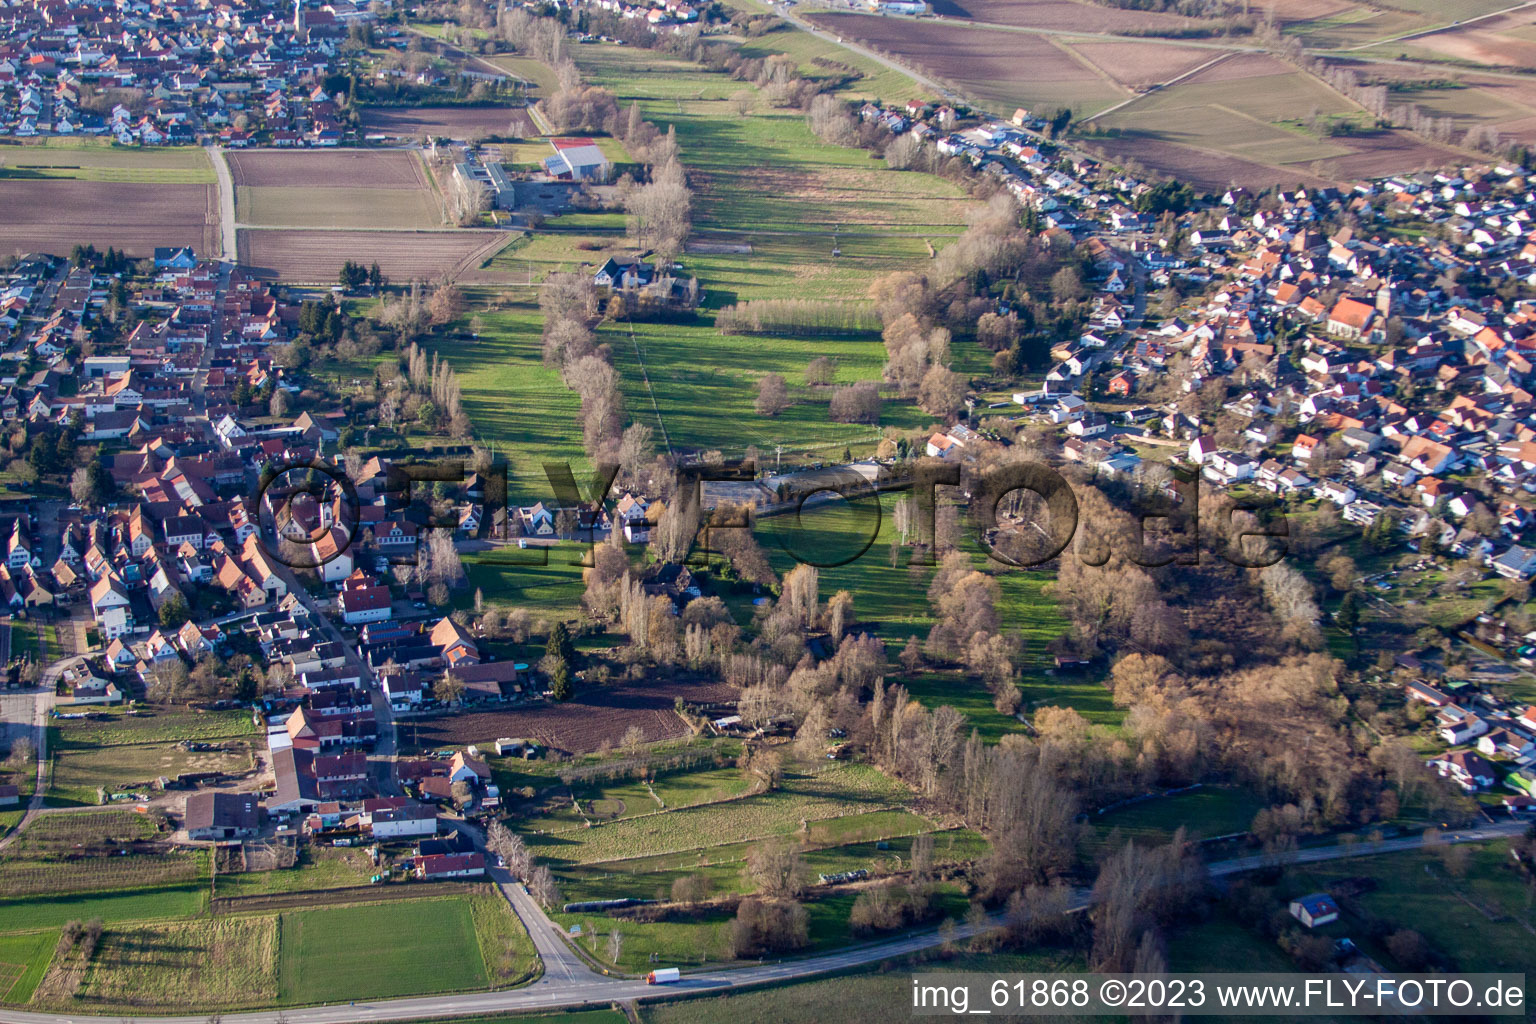 District Mühlhofen in Billigheim-Ingenheim in the state Rhineland-Palatinate, Germany from above